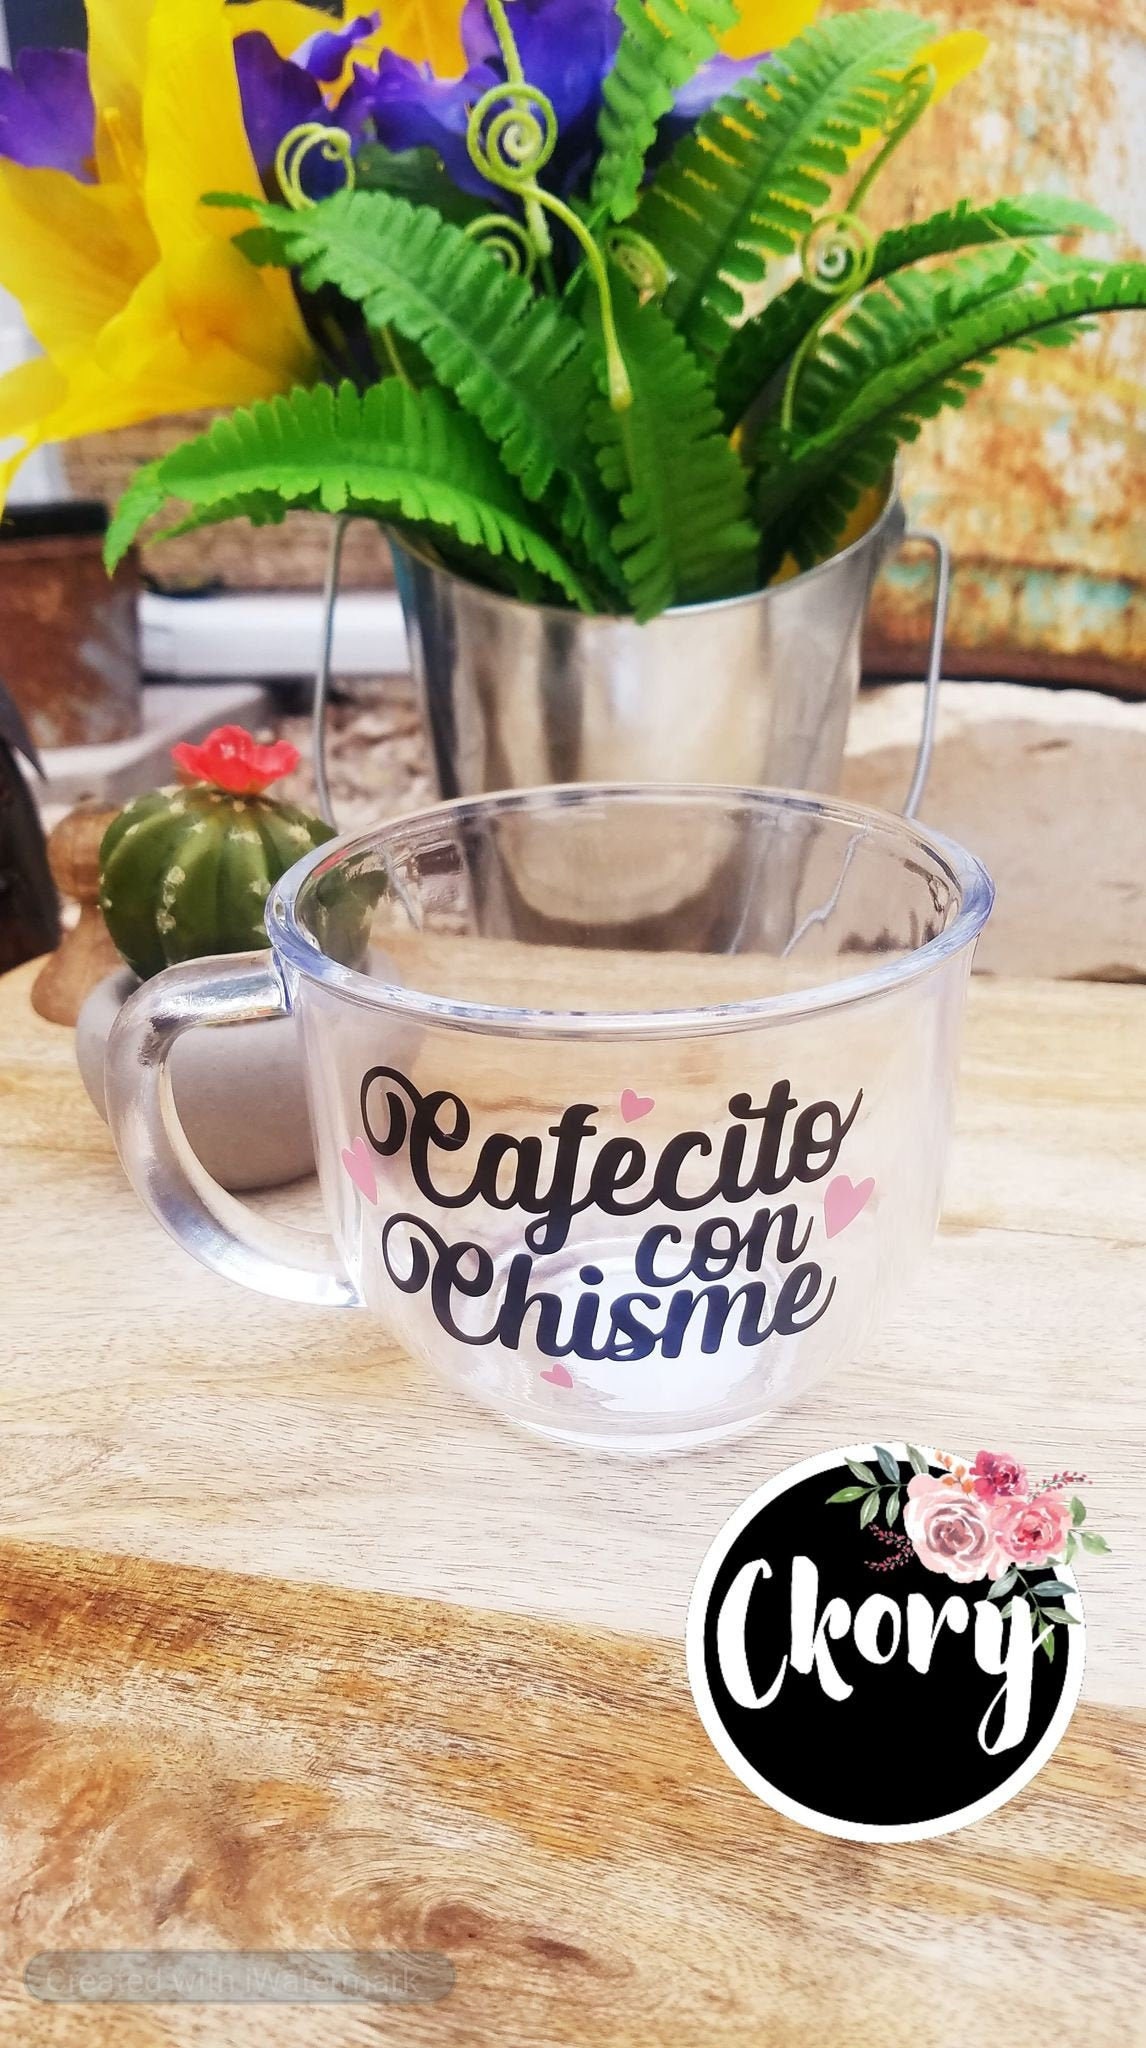 Cafecito & chisme mug – Tiendita Bonita